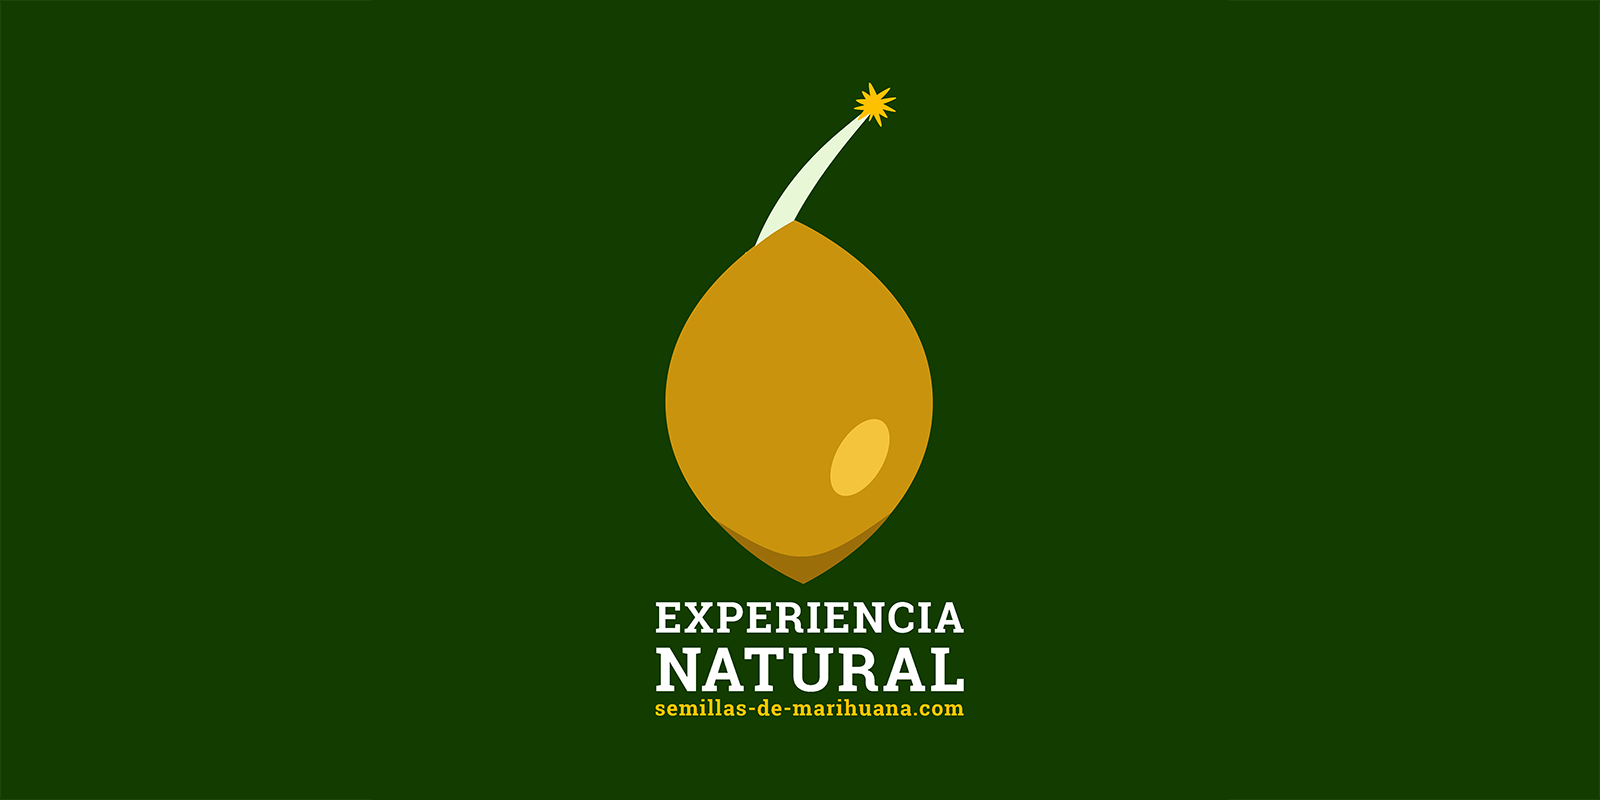 (c) Experiencianatural.com